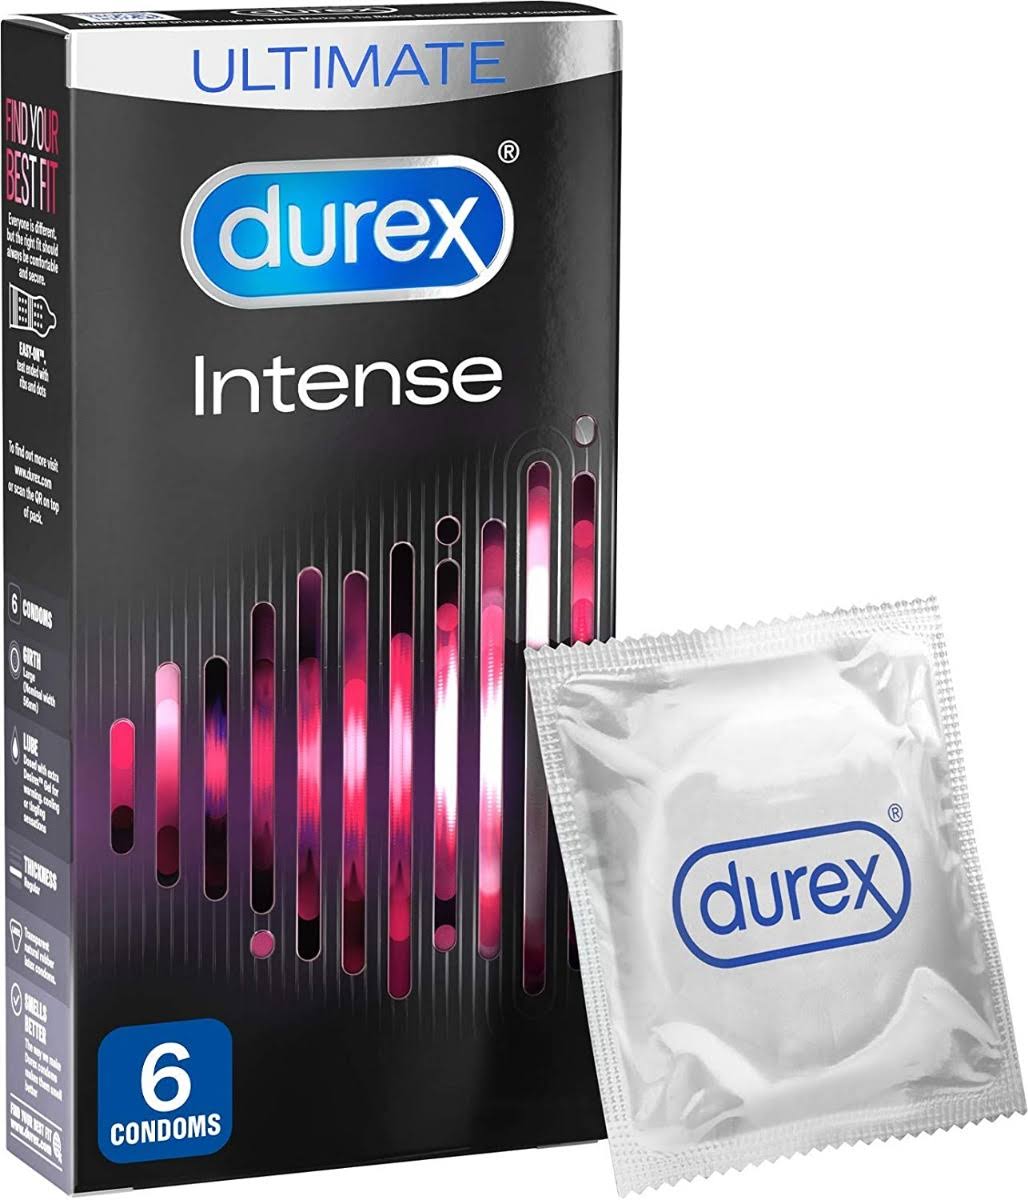 Durex Intense Condoms - 6pk